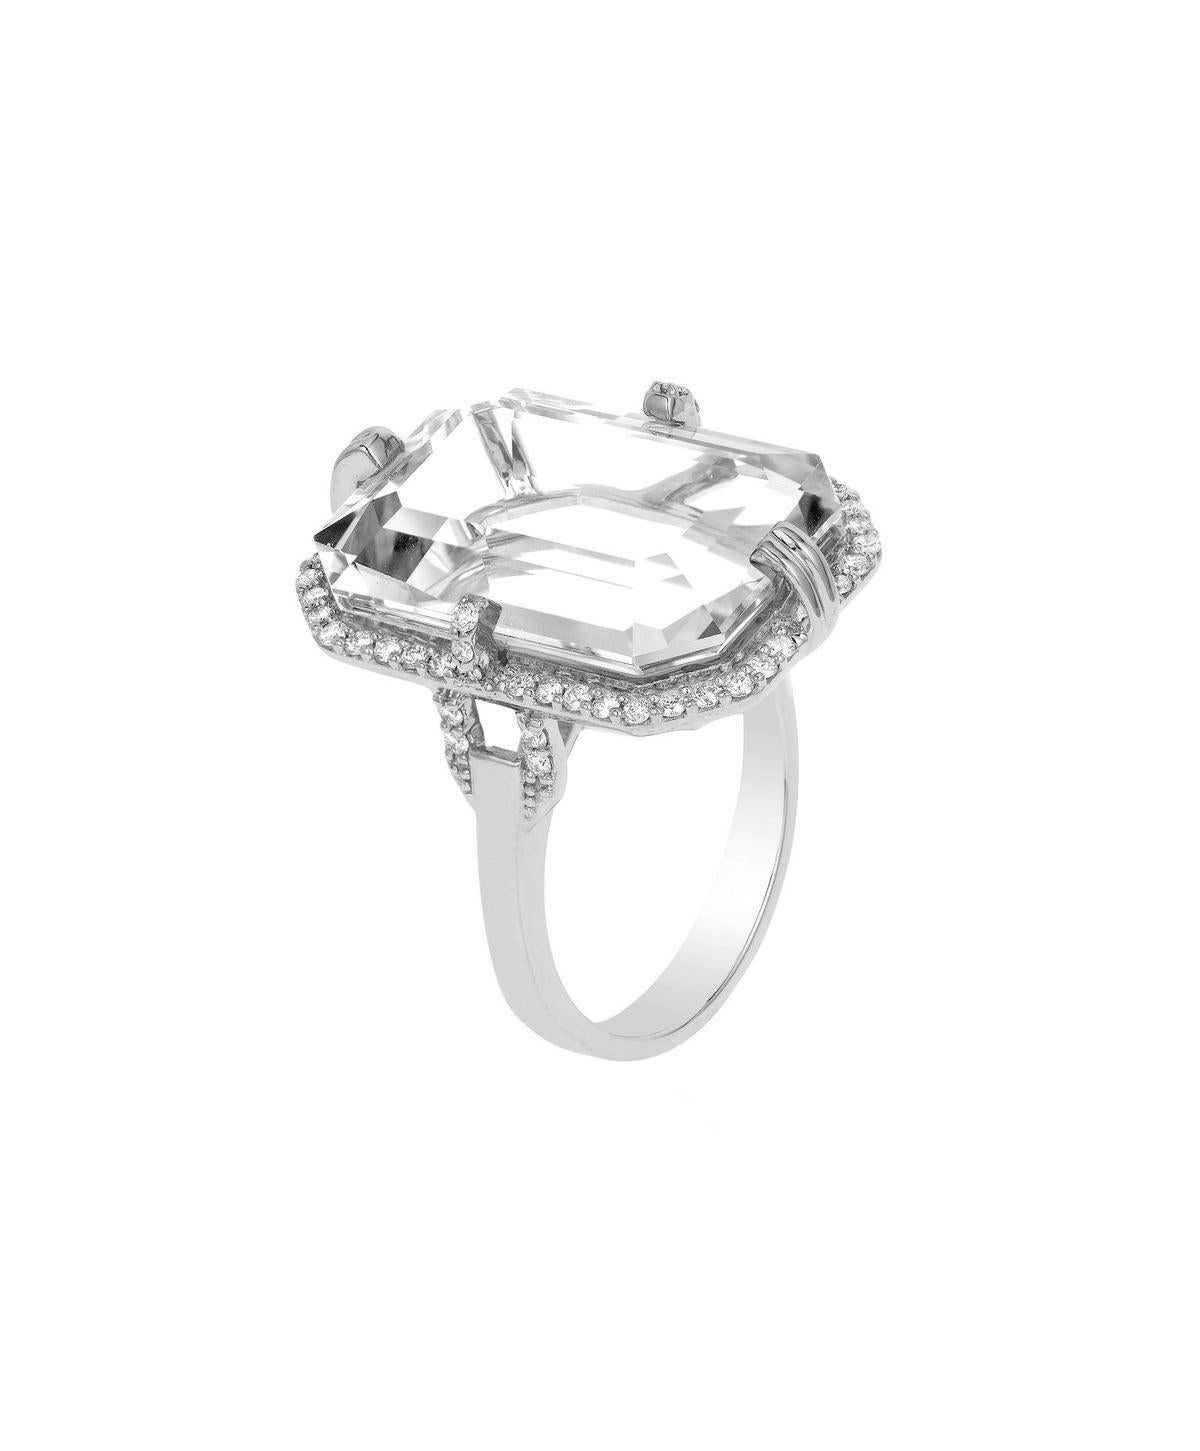 Emerald Cut Goshwara Rock Crystal with Diamonds Ring For Sale